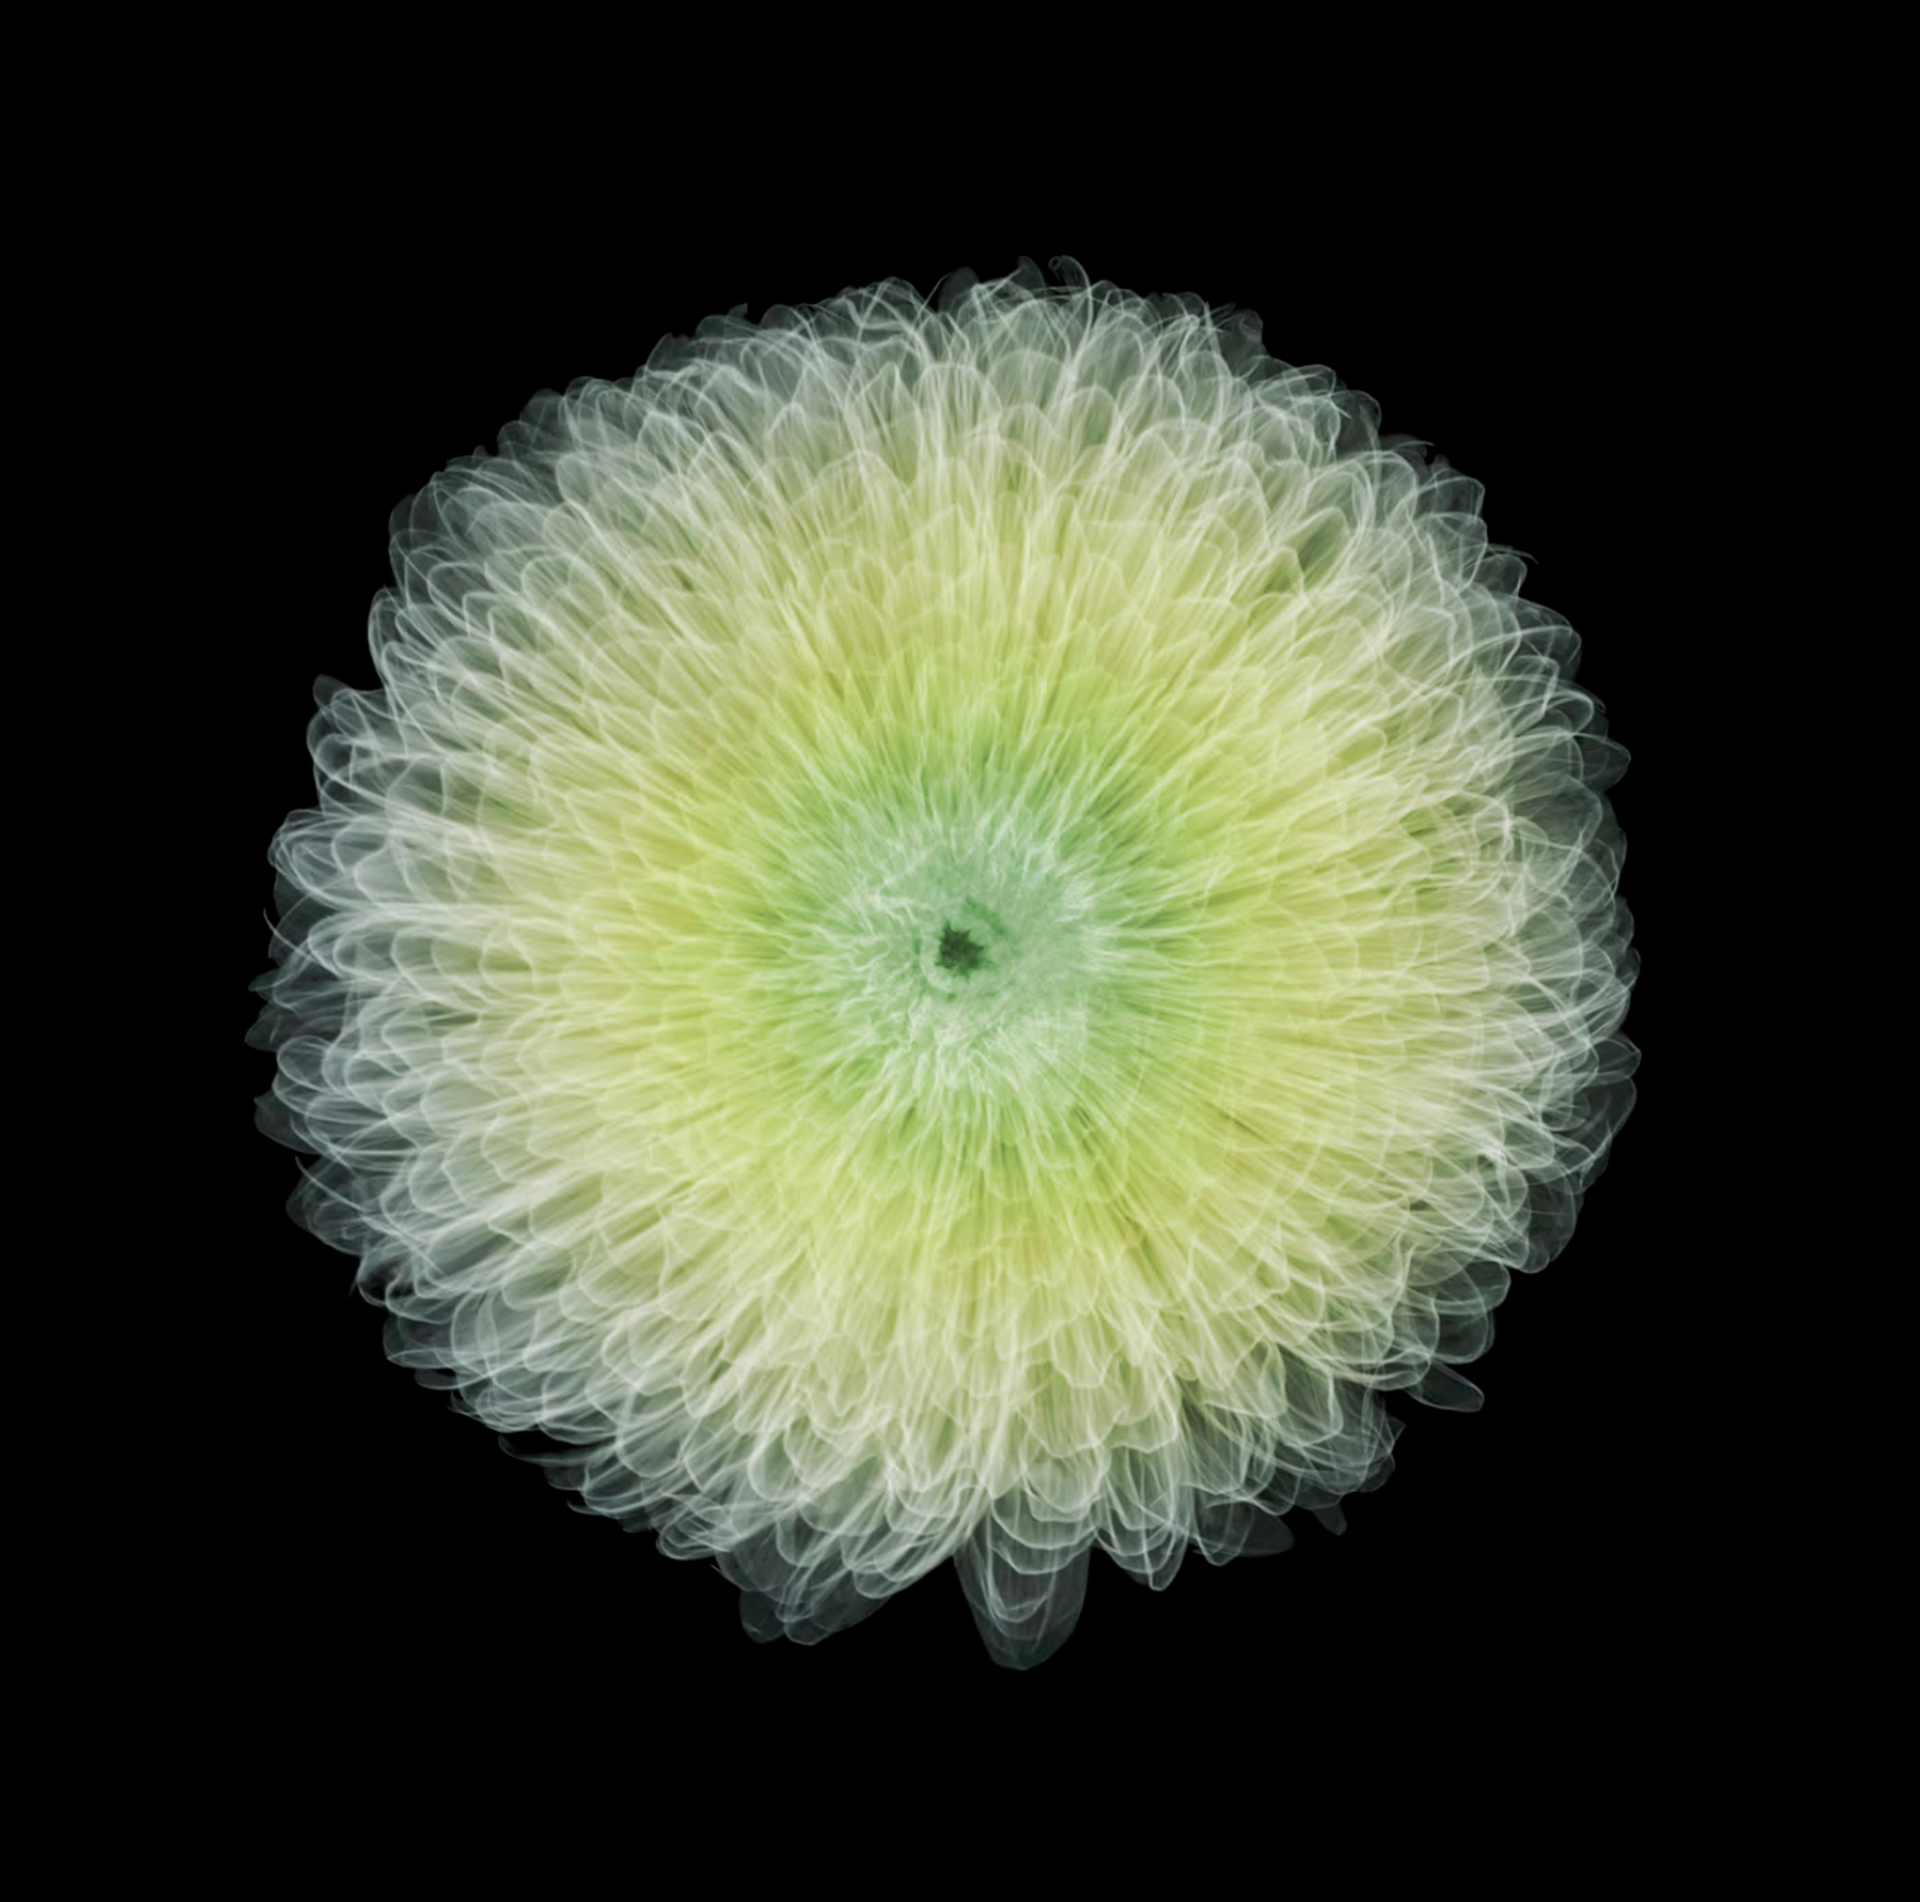 Chrysanthemum Pom Pom by Nick Veasey